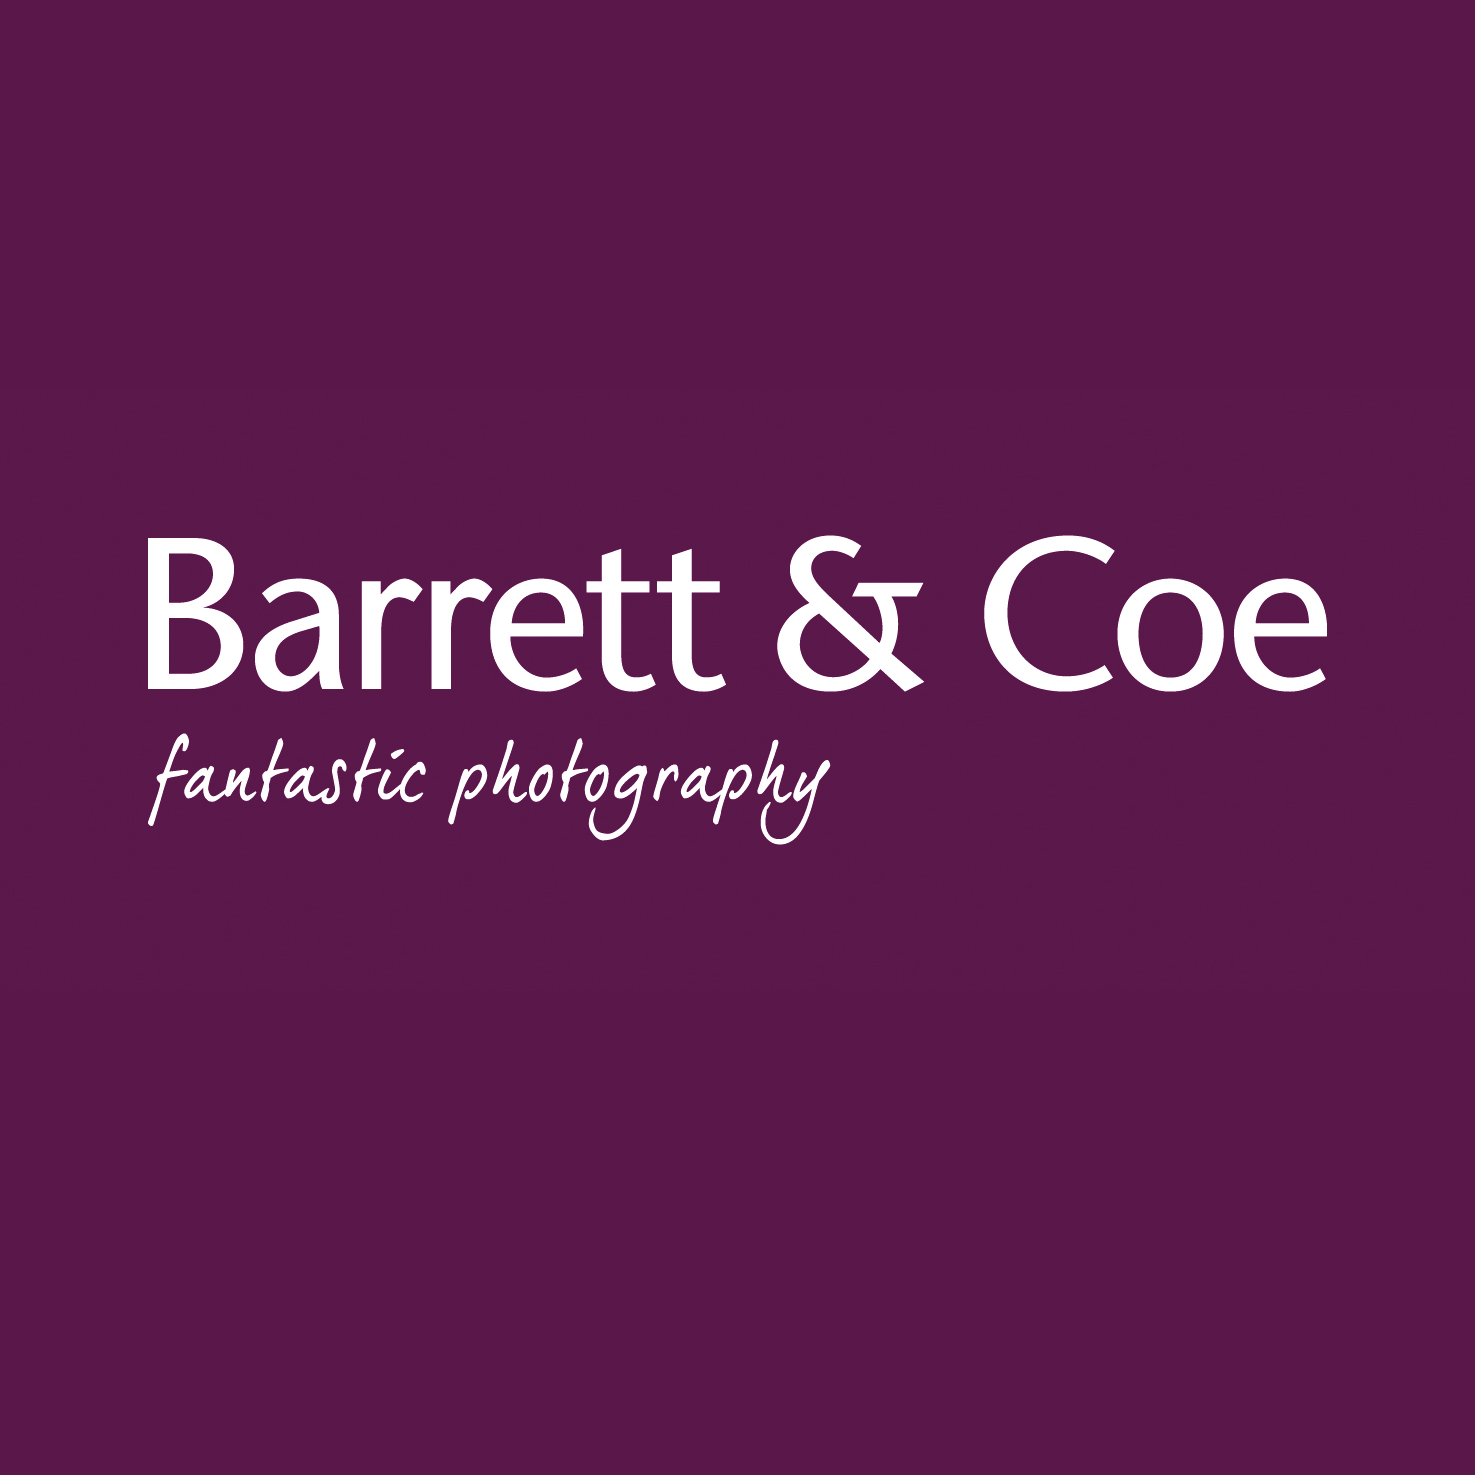 Barrett & Coe Franchise